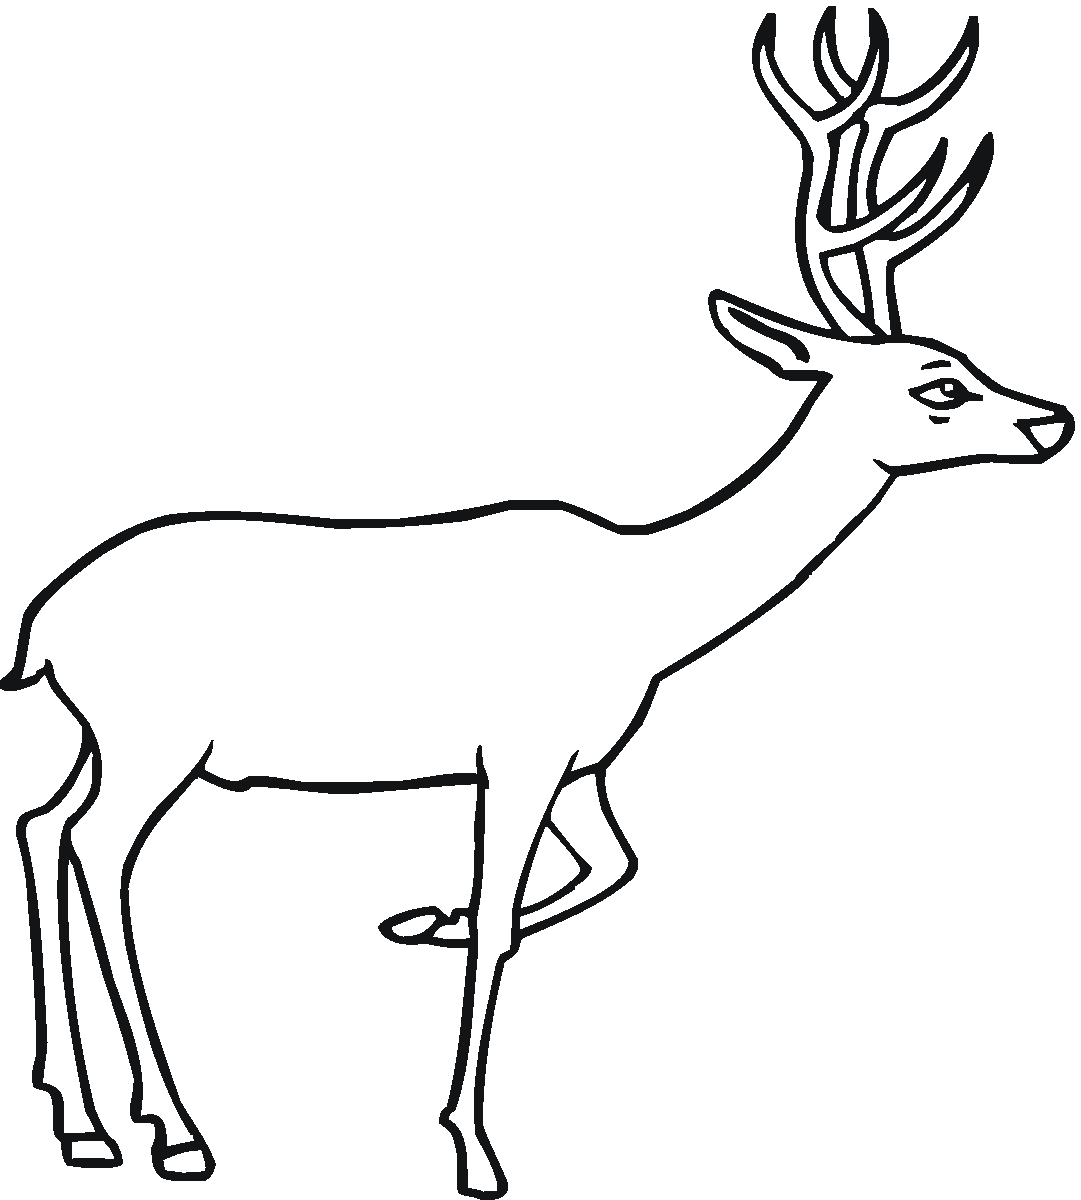 Deer Line Drawing - ClipArt Best